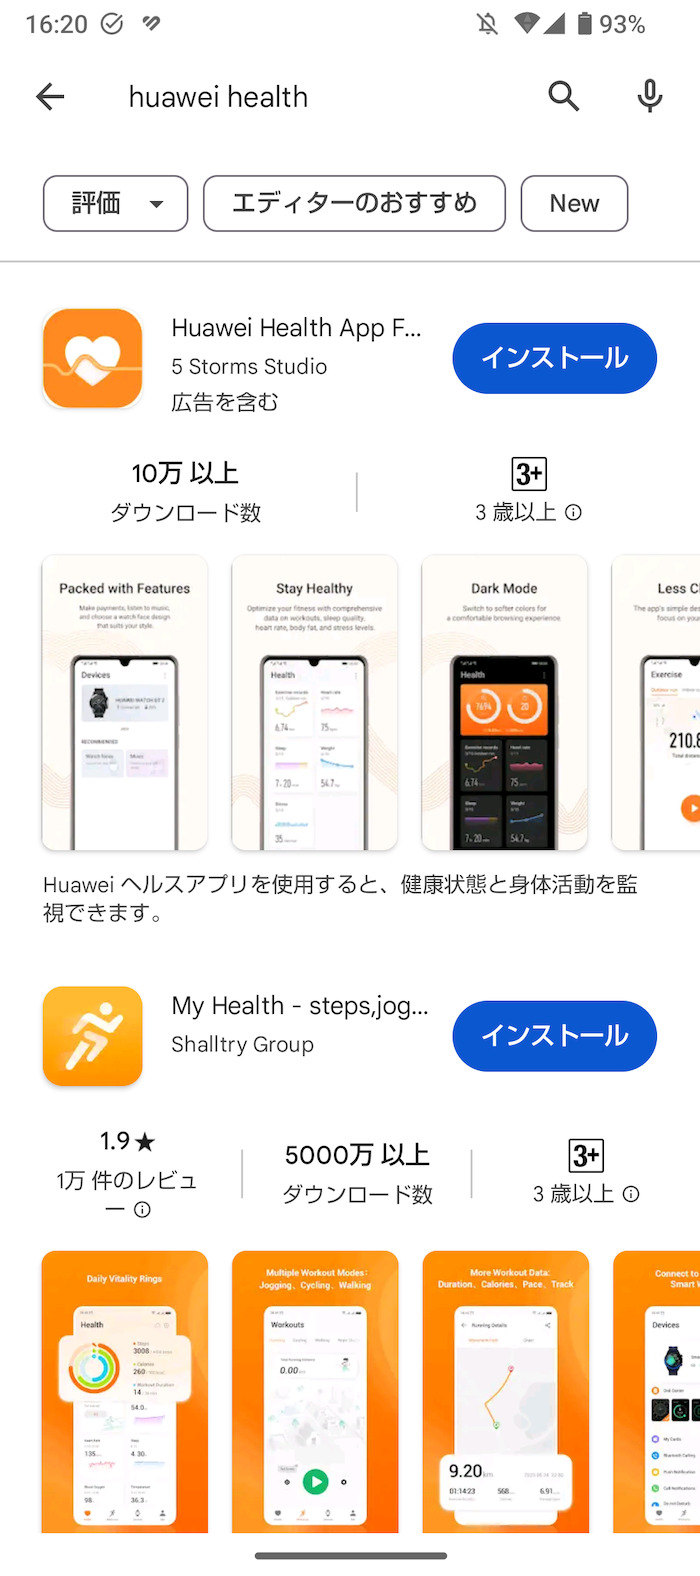 Android版HUAWEI Healthは提供されていない